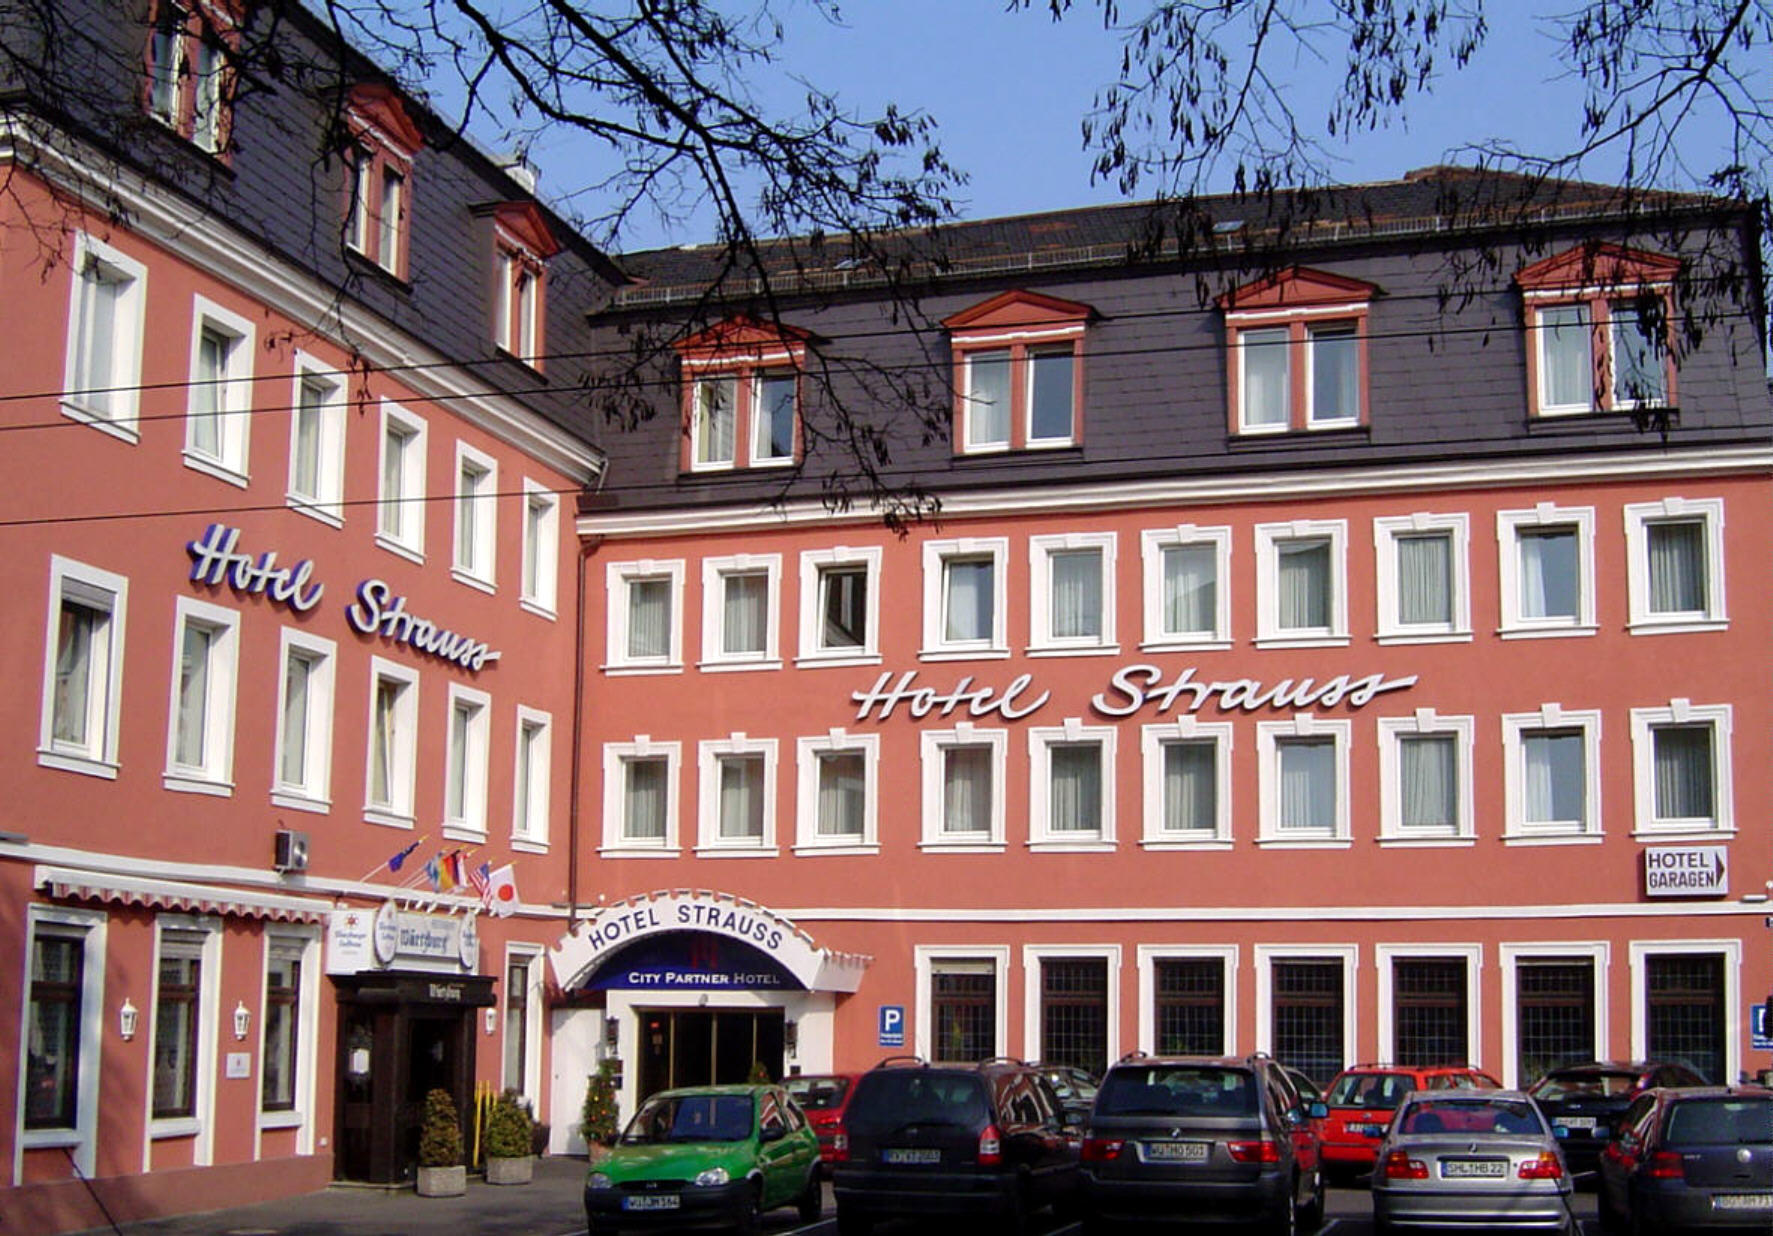 City Partner Hotel Strauss in Würzburg • HolidayCheck ...